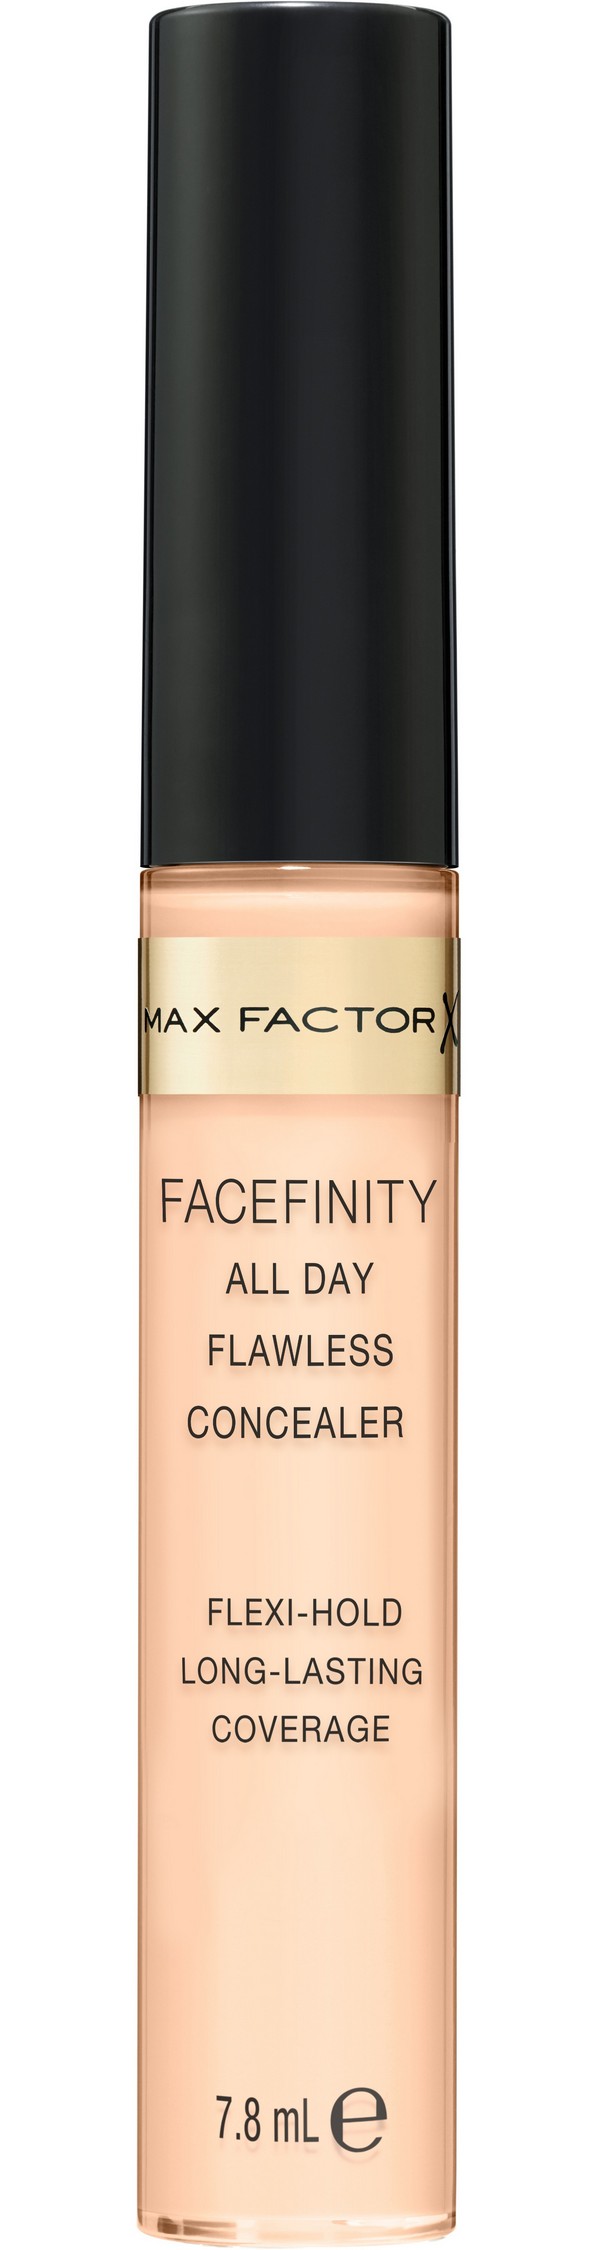 MAX FACTOR Консилер для лица 020 / Facefinity All Day Flawle